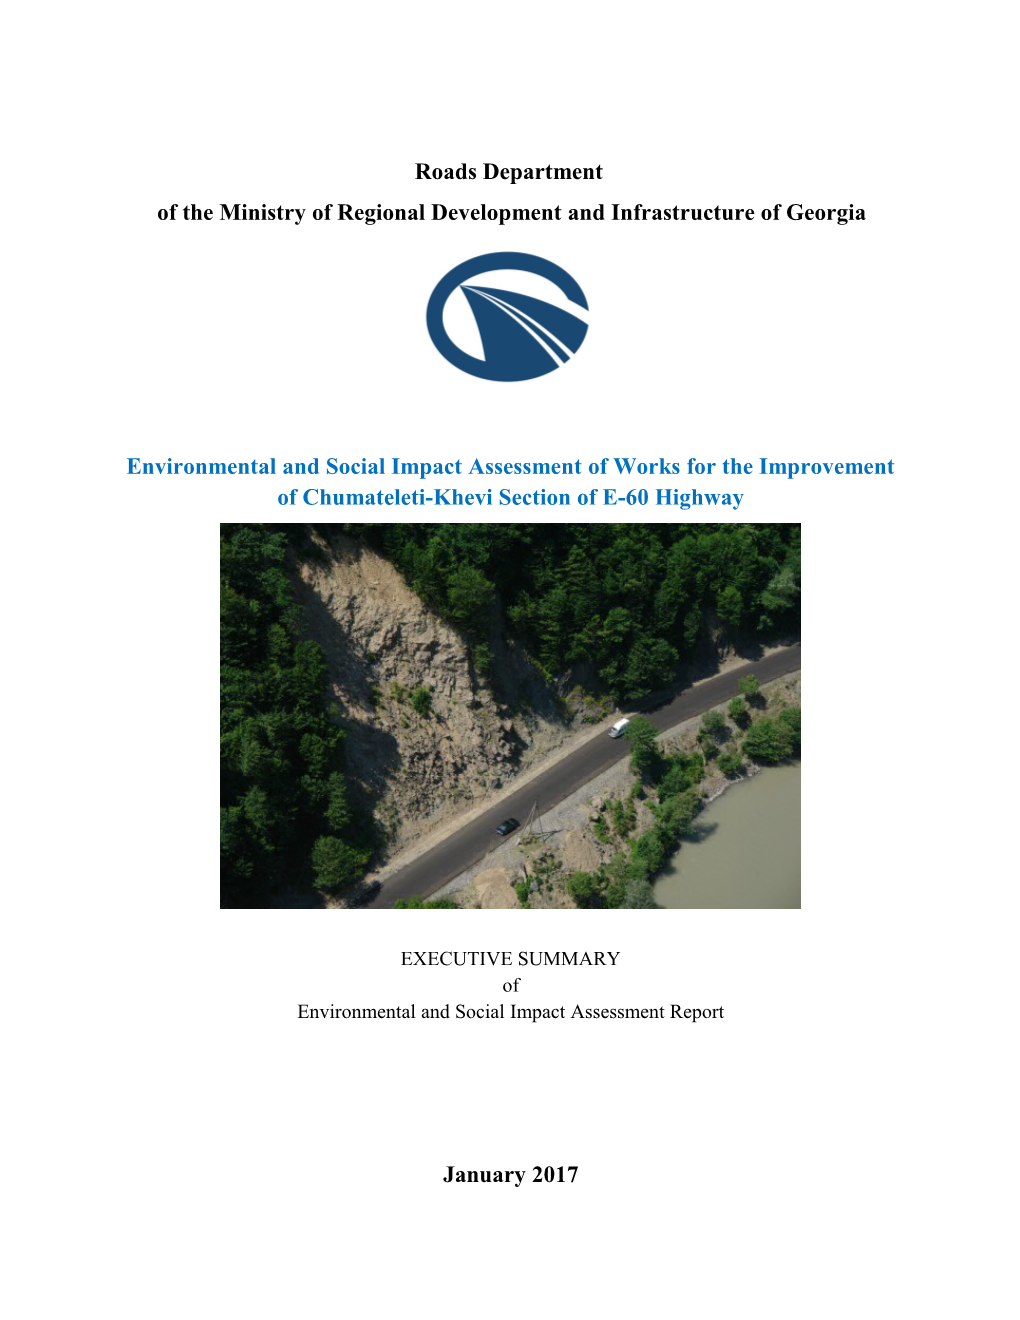 Georgia - Works for the Improvement of Chumateleti-Khevi Section of E-60 Highway - Environmental